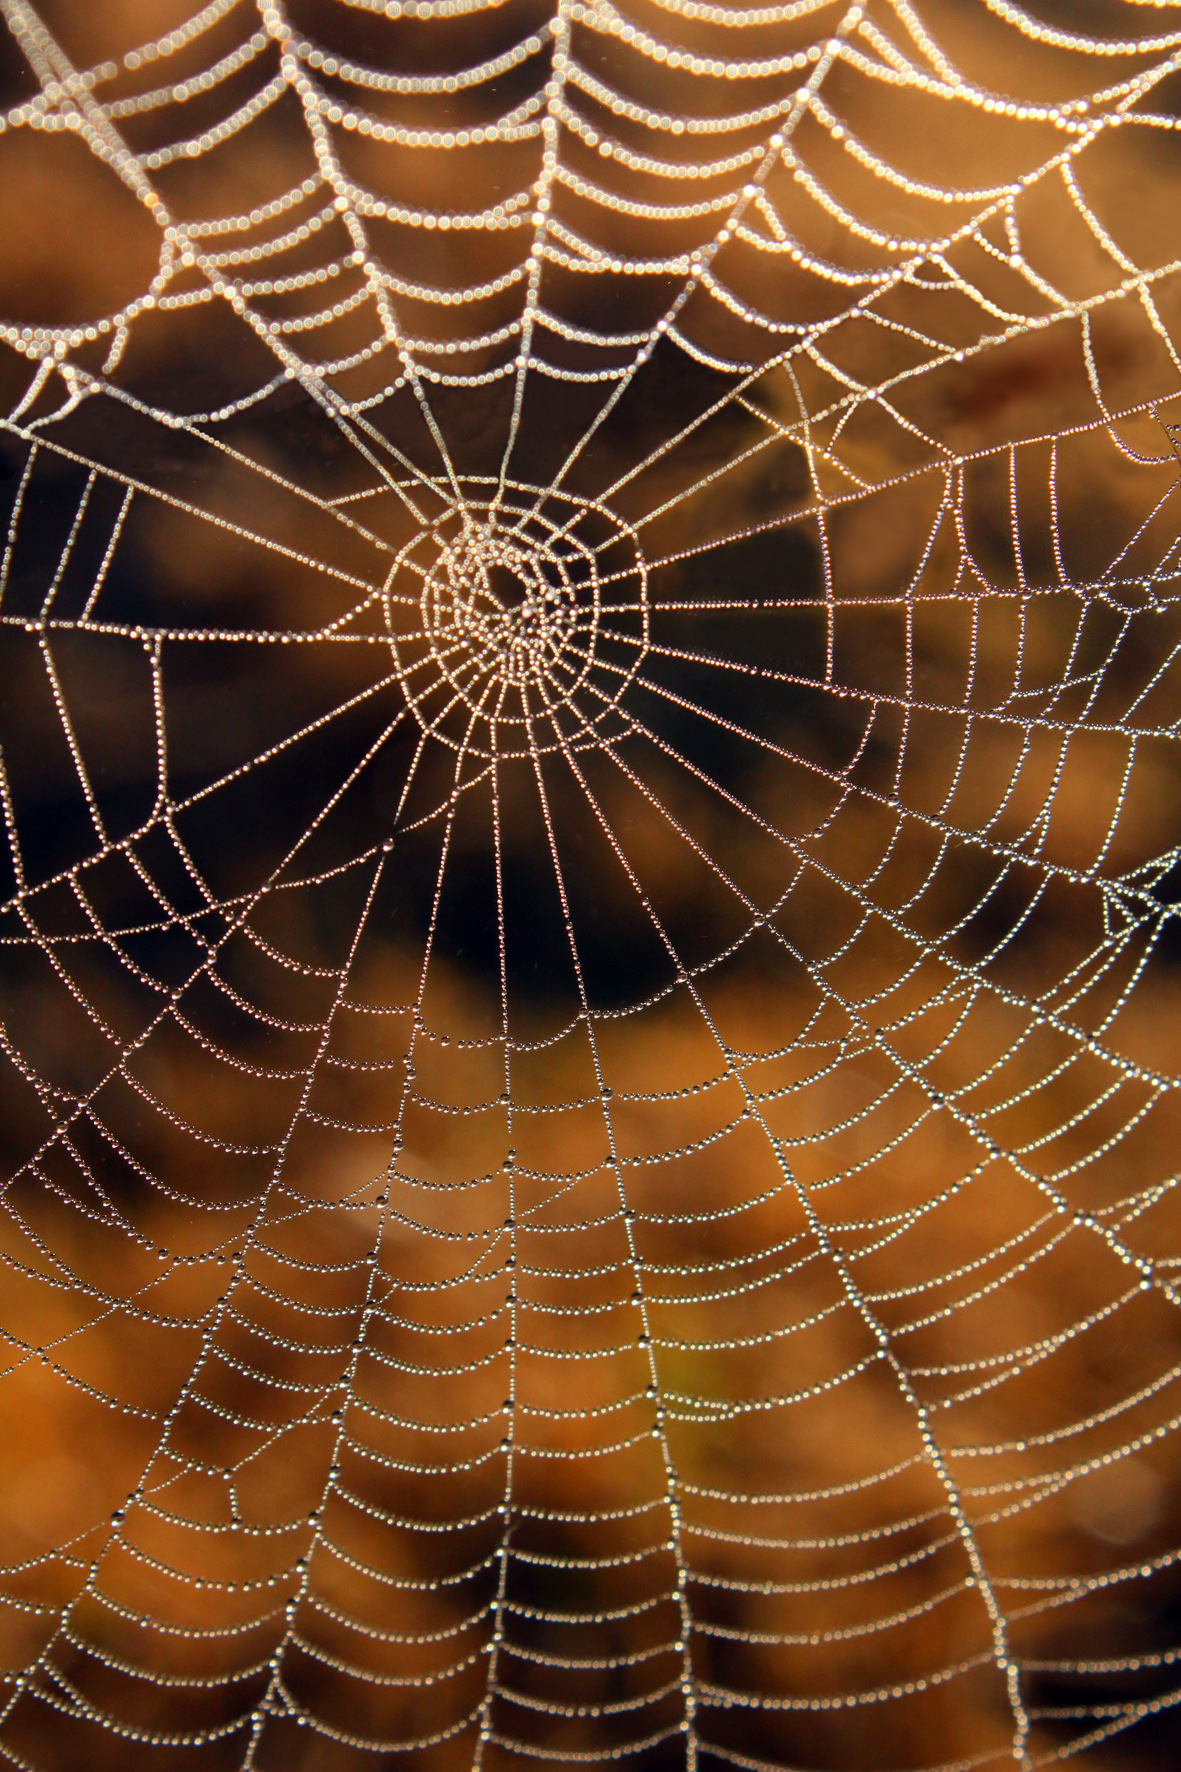 Spider Web, Dew, Morning, Spider, Web, HQ Photo